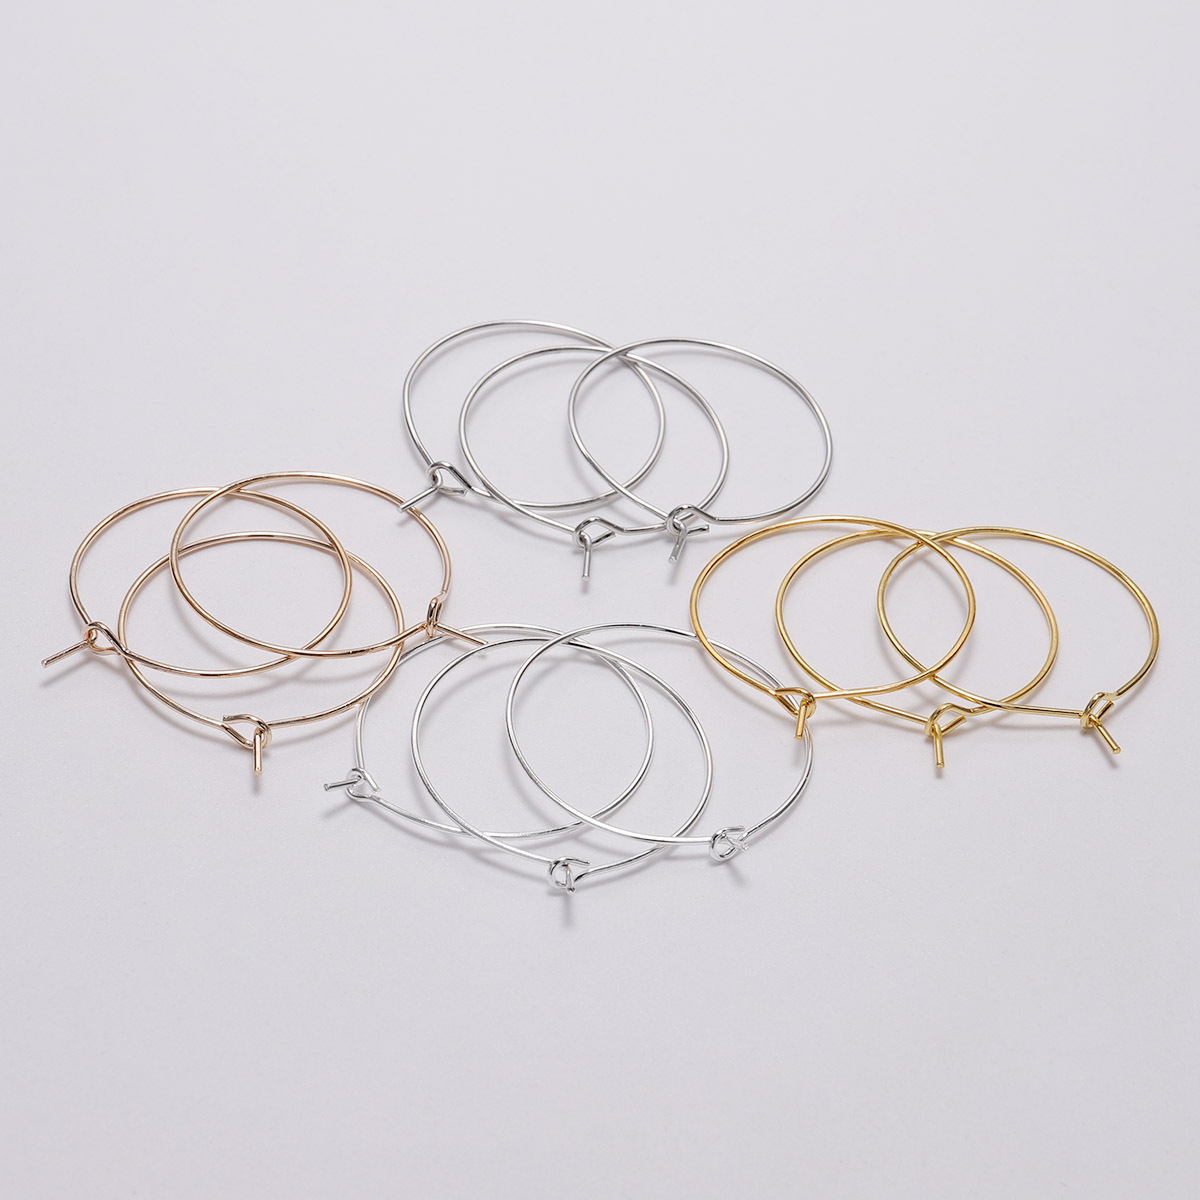 Earring Hoops Finding-35mm Gold Plated Hoop Earrings for Jewelry Making-diy  Beading Hoops-wholesale-bulk-hypoallergenic 